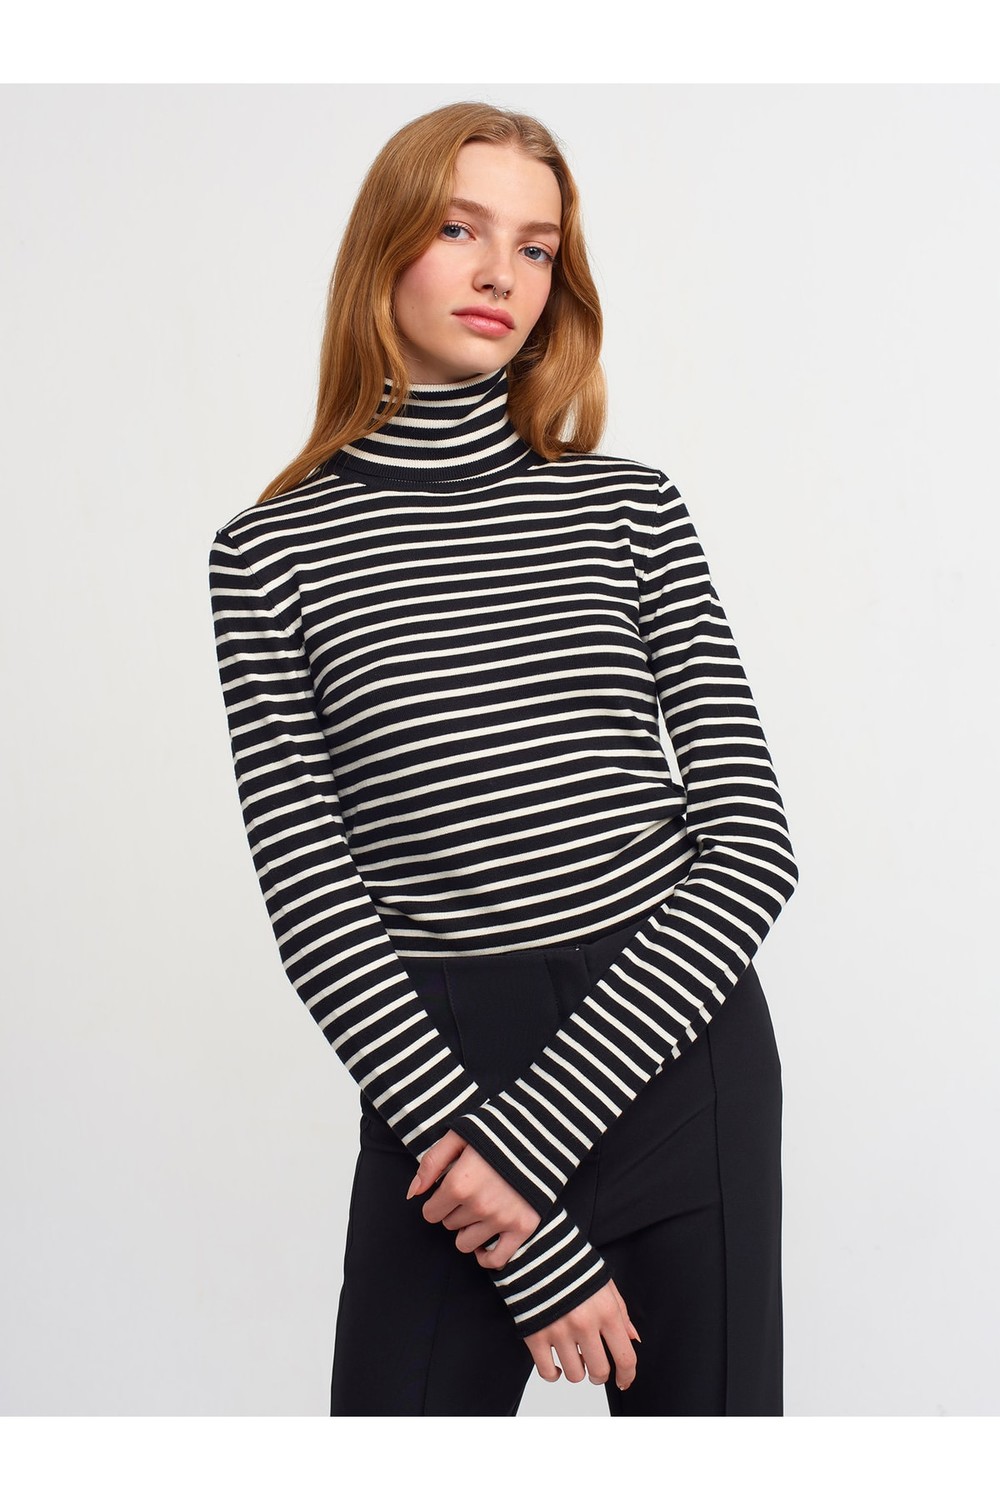 Dilvin 10302 Turtleneck Striped Sweater-black-cream